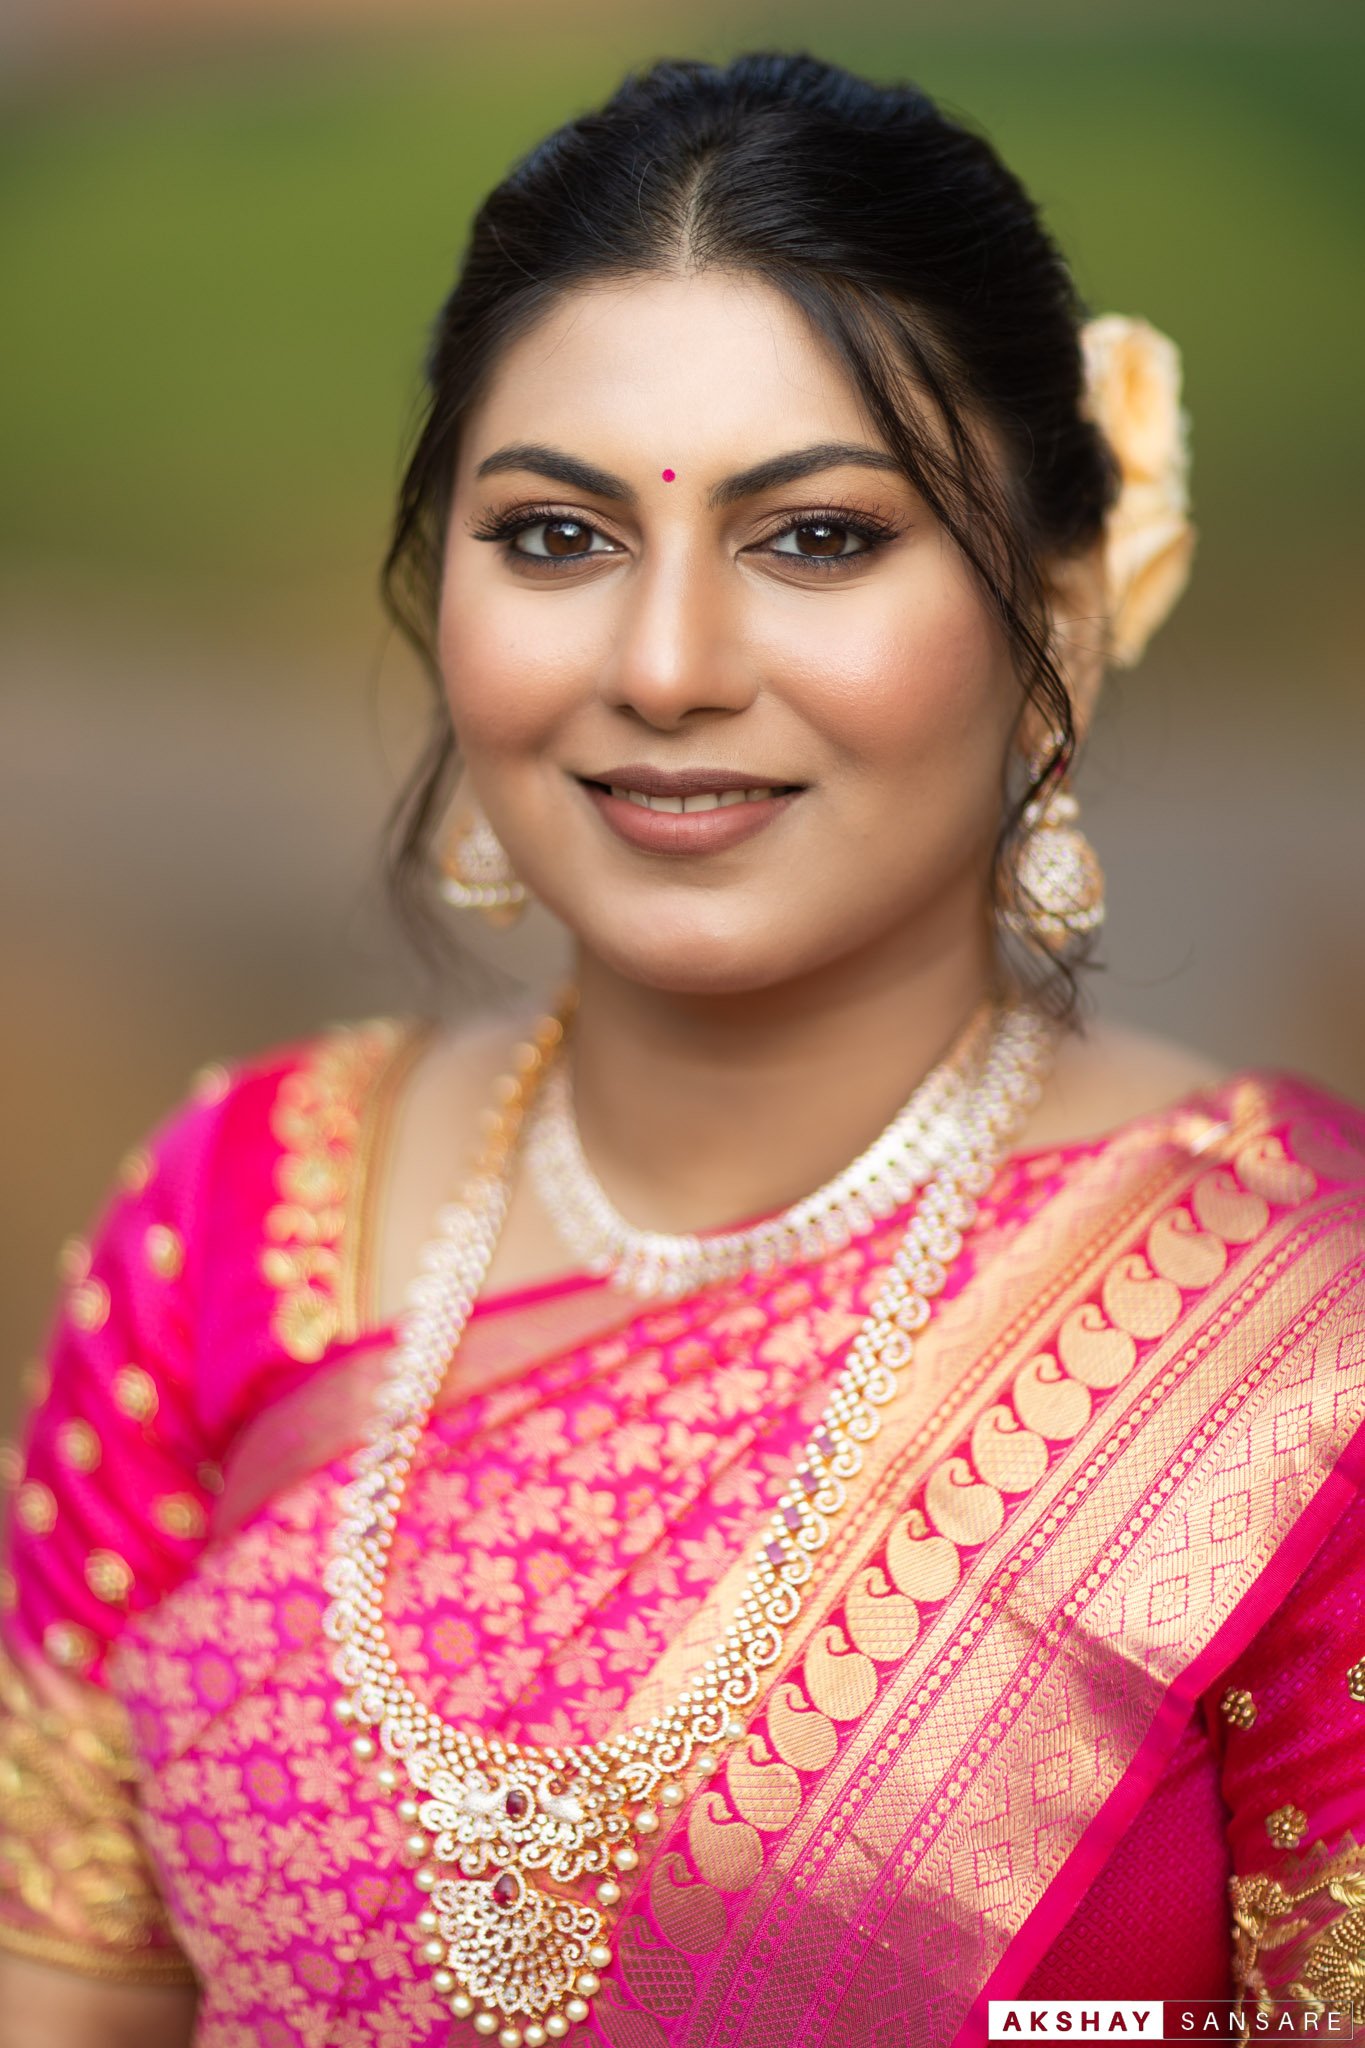 Raj x Eesha Wedding Compress Akshay Sansare Photography & Films Best wedding photographers in mumbai india-18.jpg